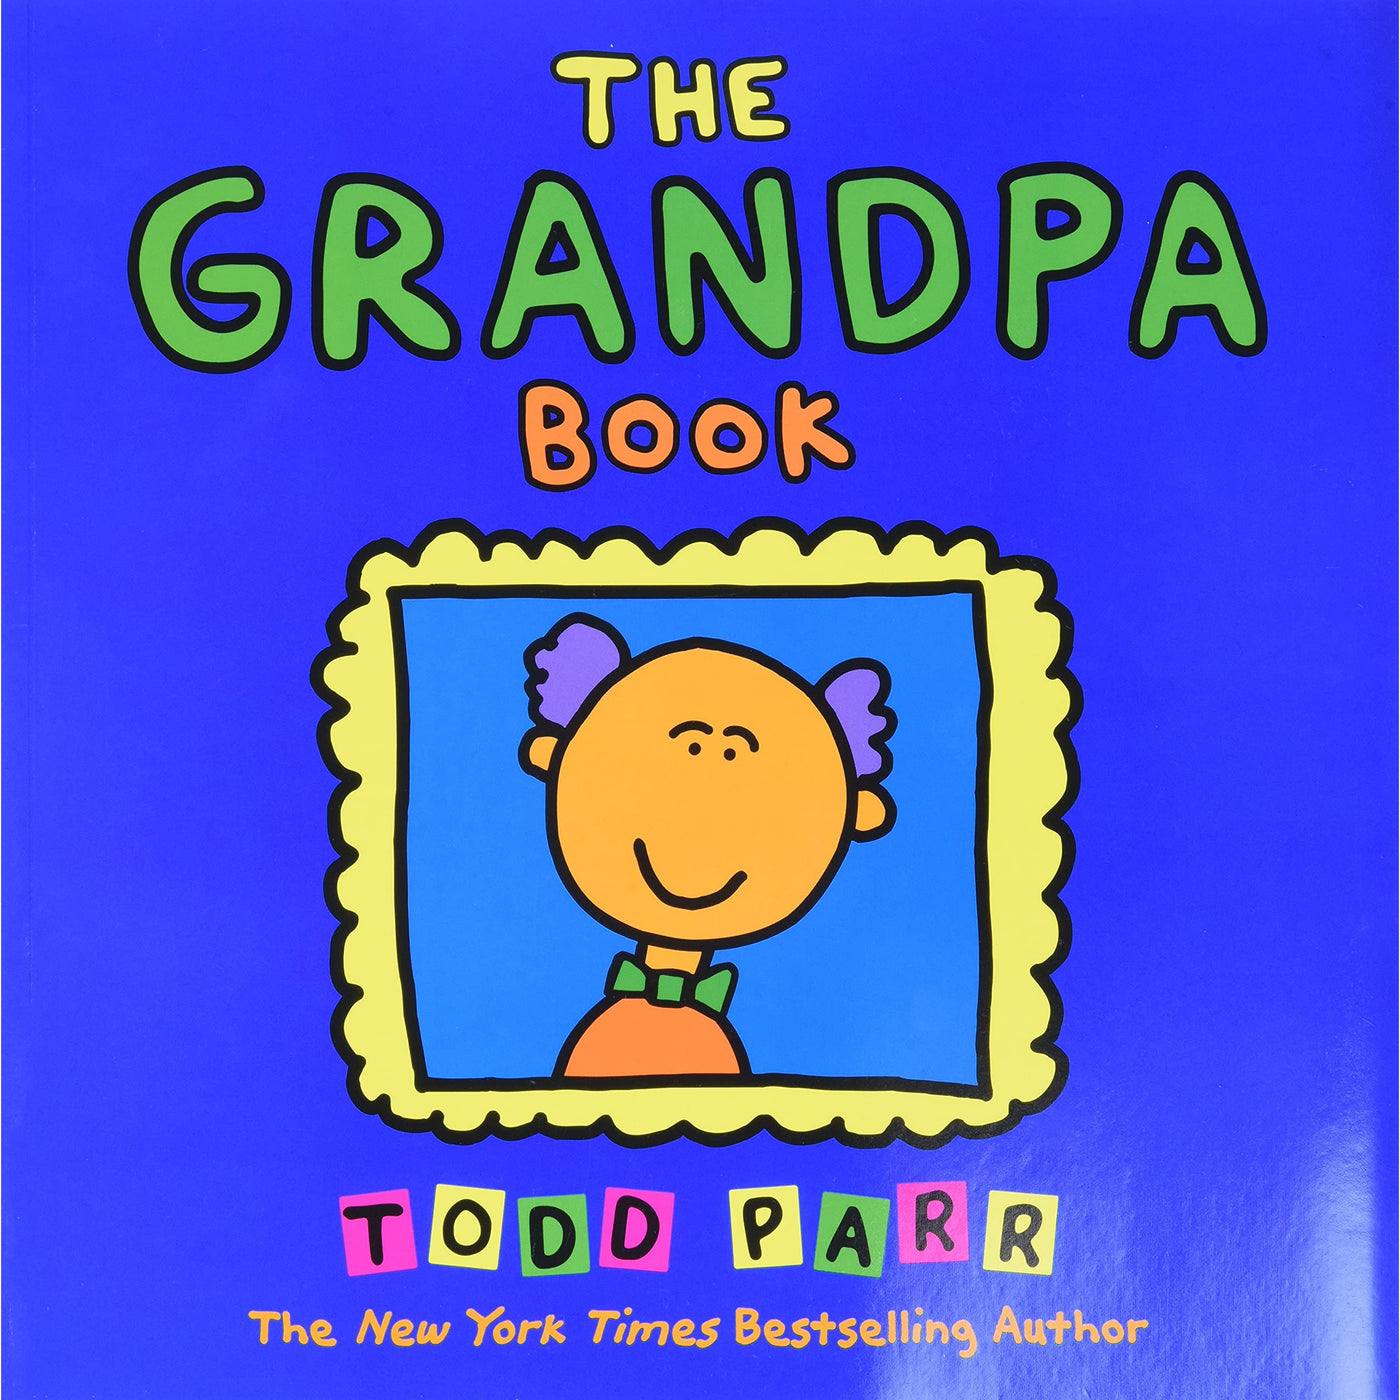 Todd Parr: The Grandpa Book Paperback